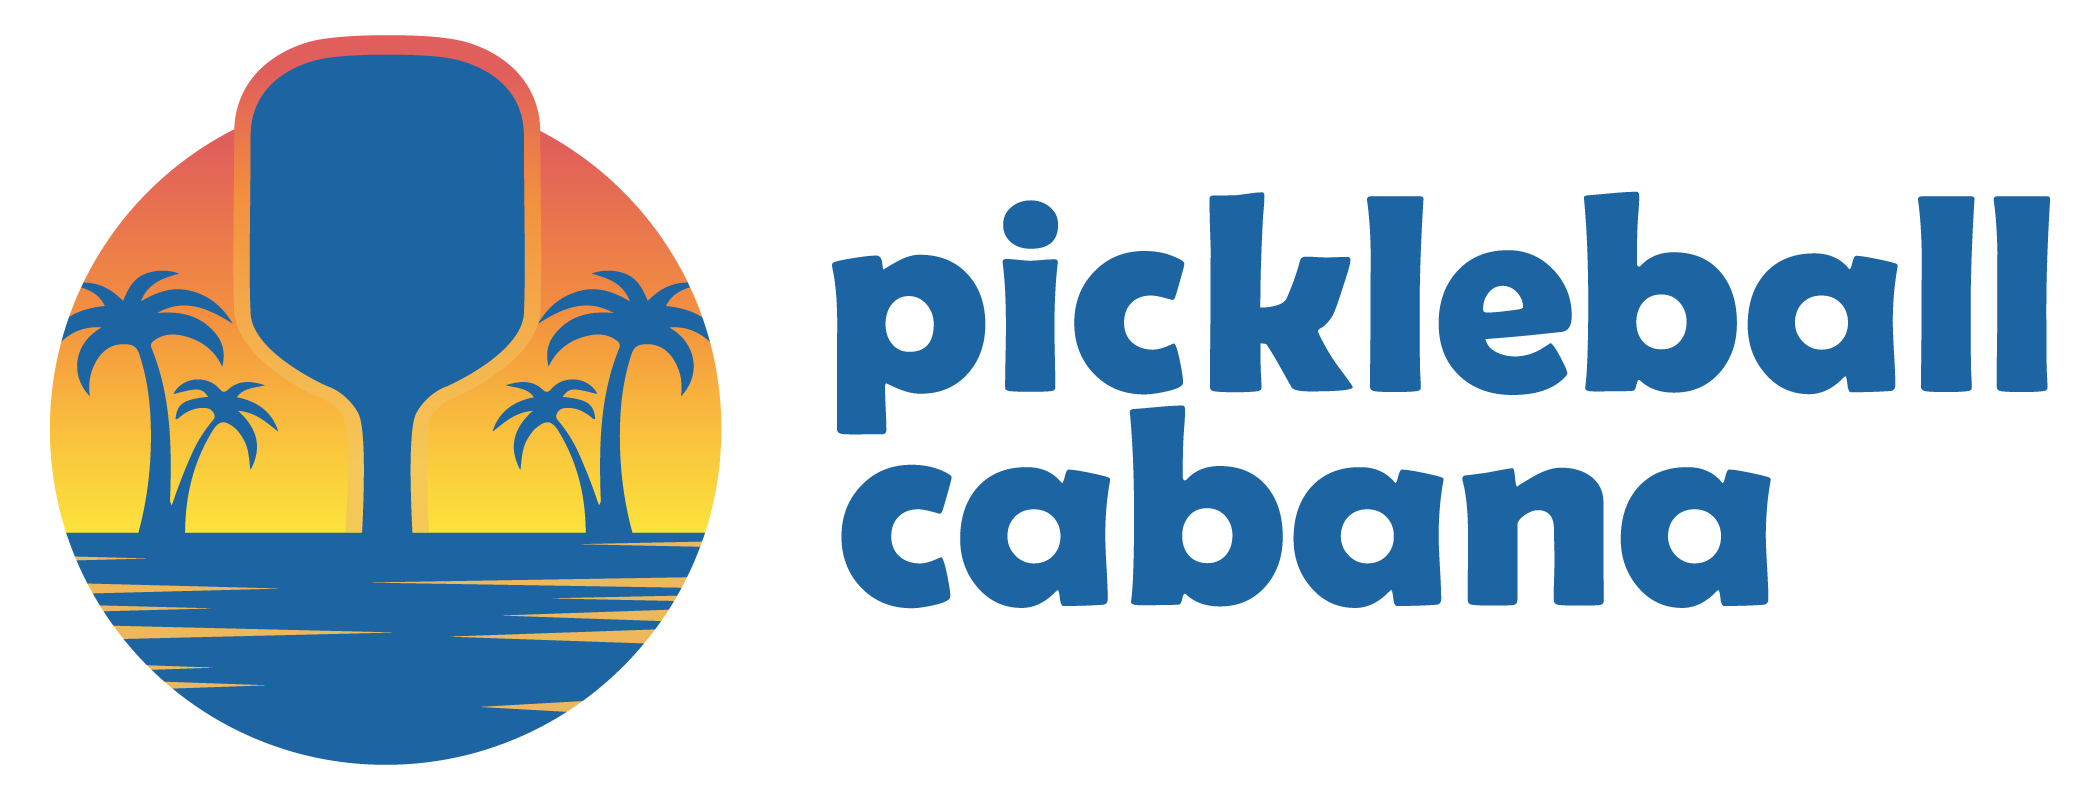 Tennis & Pickleball Cabana